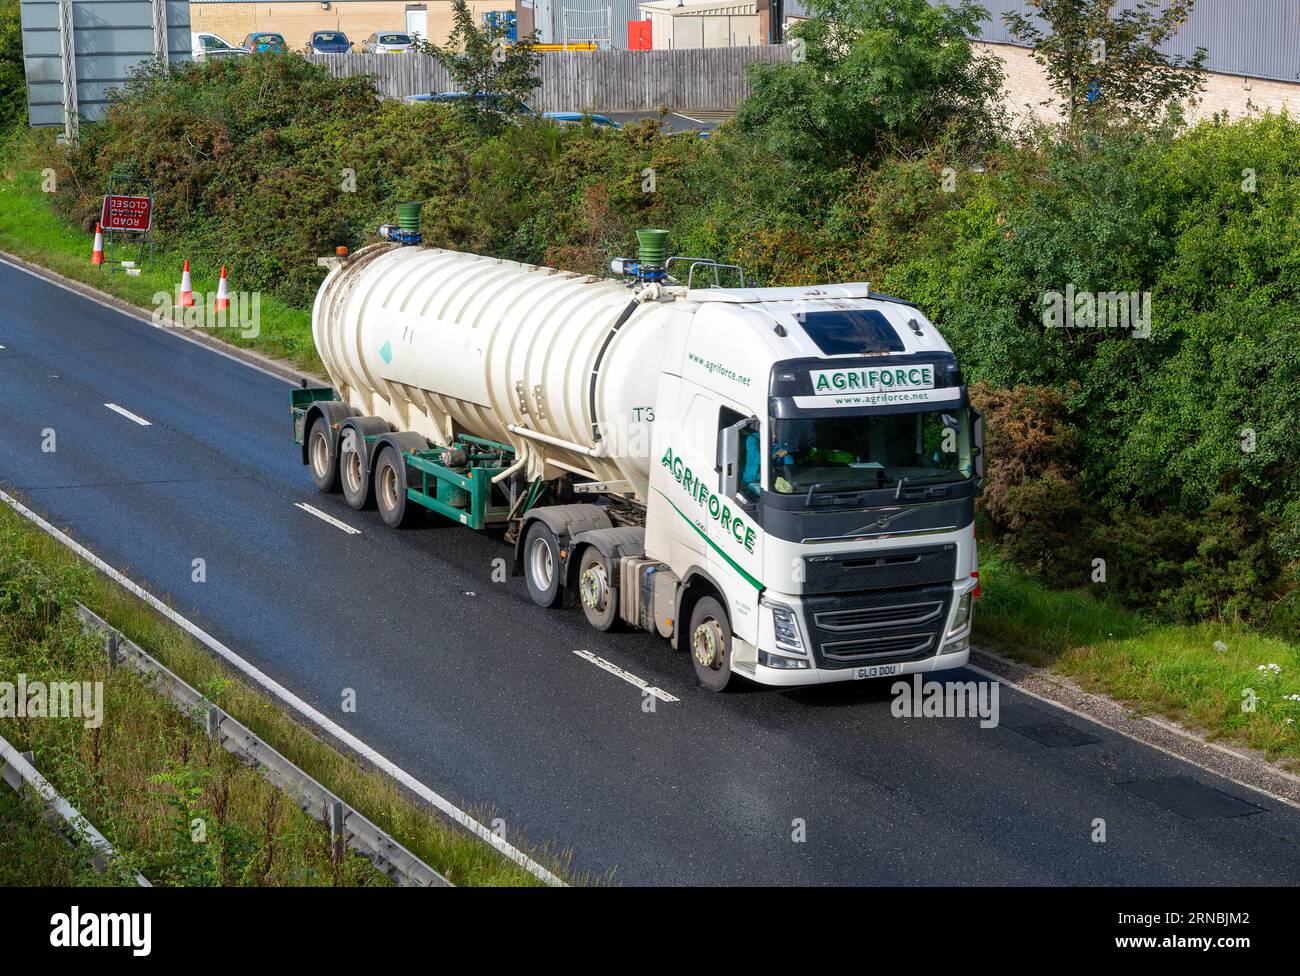 Agriforce bulk carrier lorry, A12 dual carriageway main road, Martlesham, Suffolk, England, UK Stock Photo